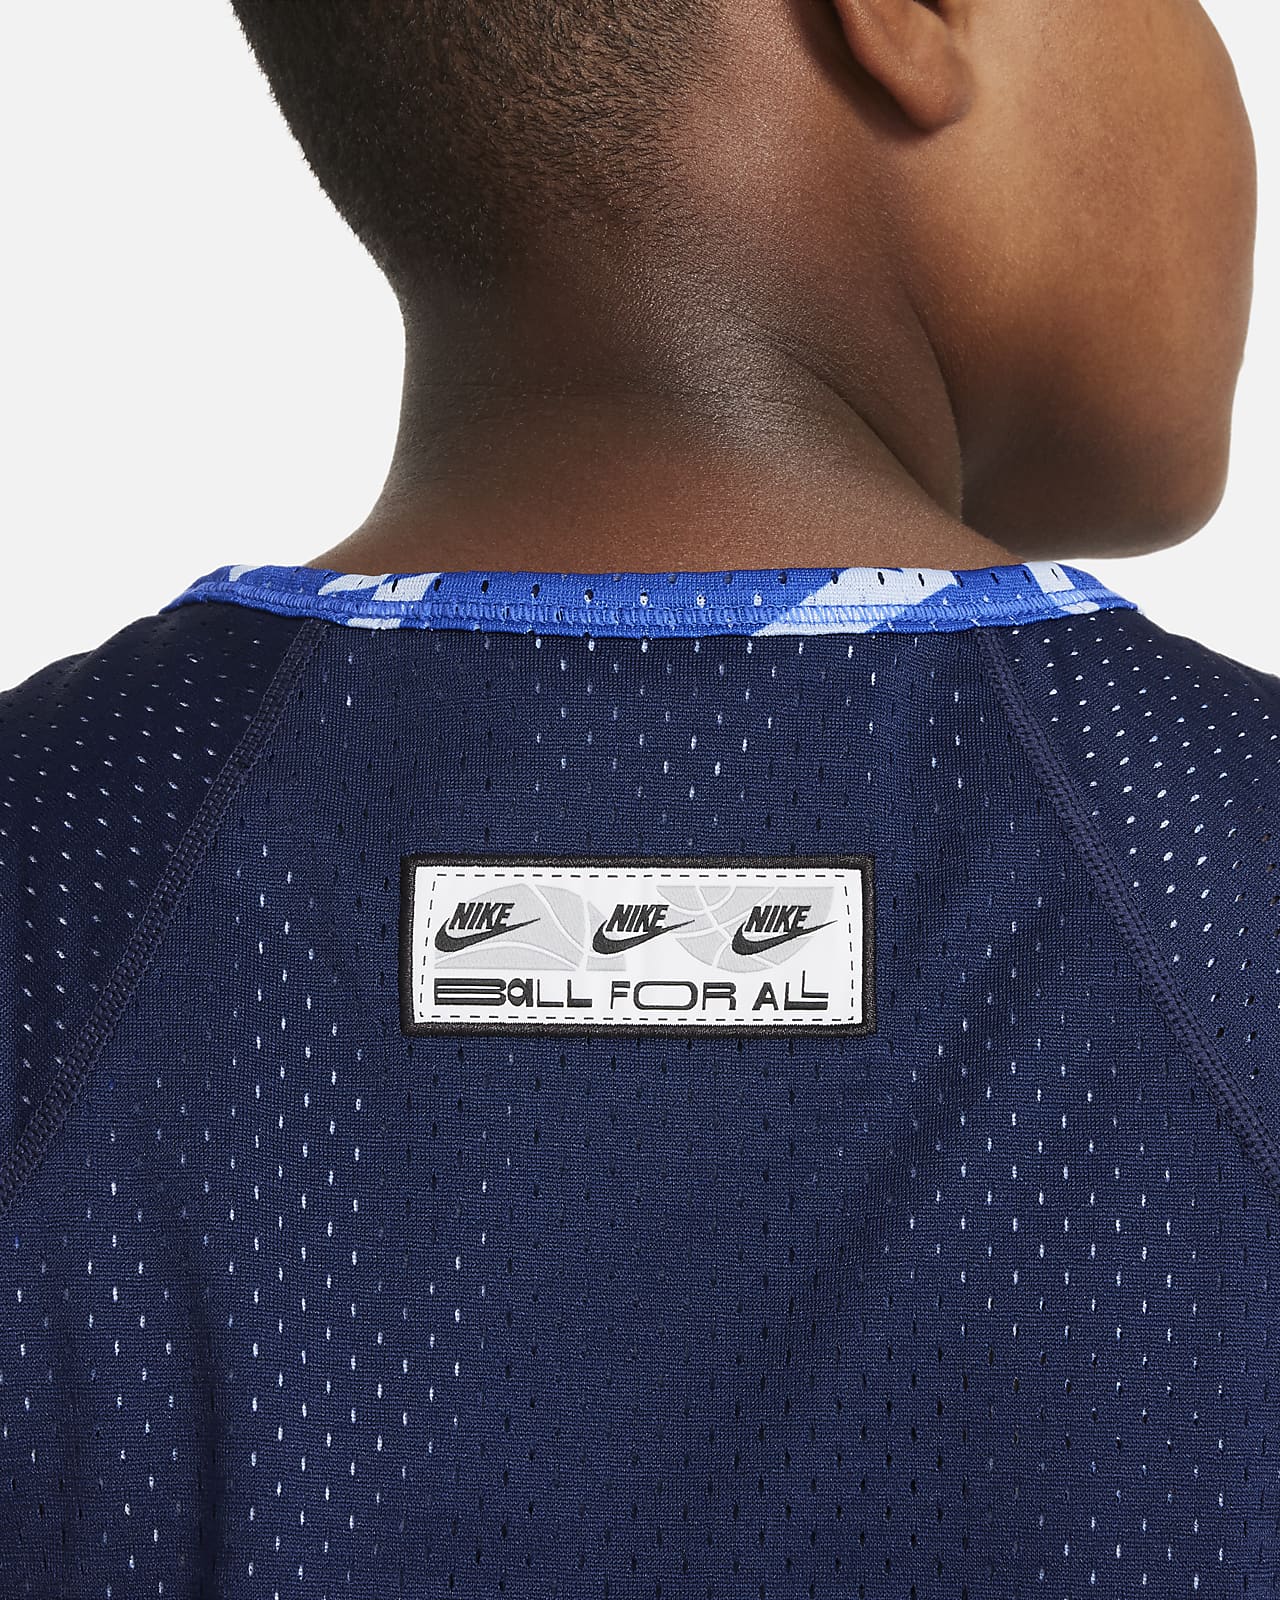 Nike Boys' Reversible Basketball Jersey